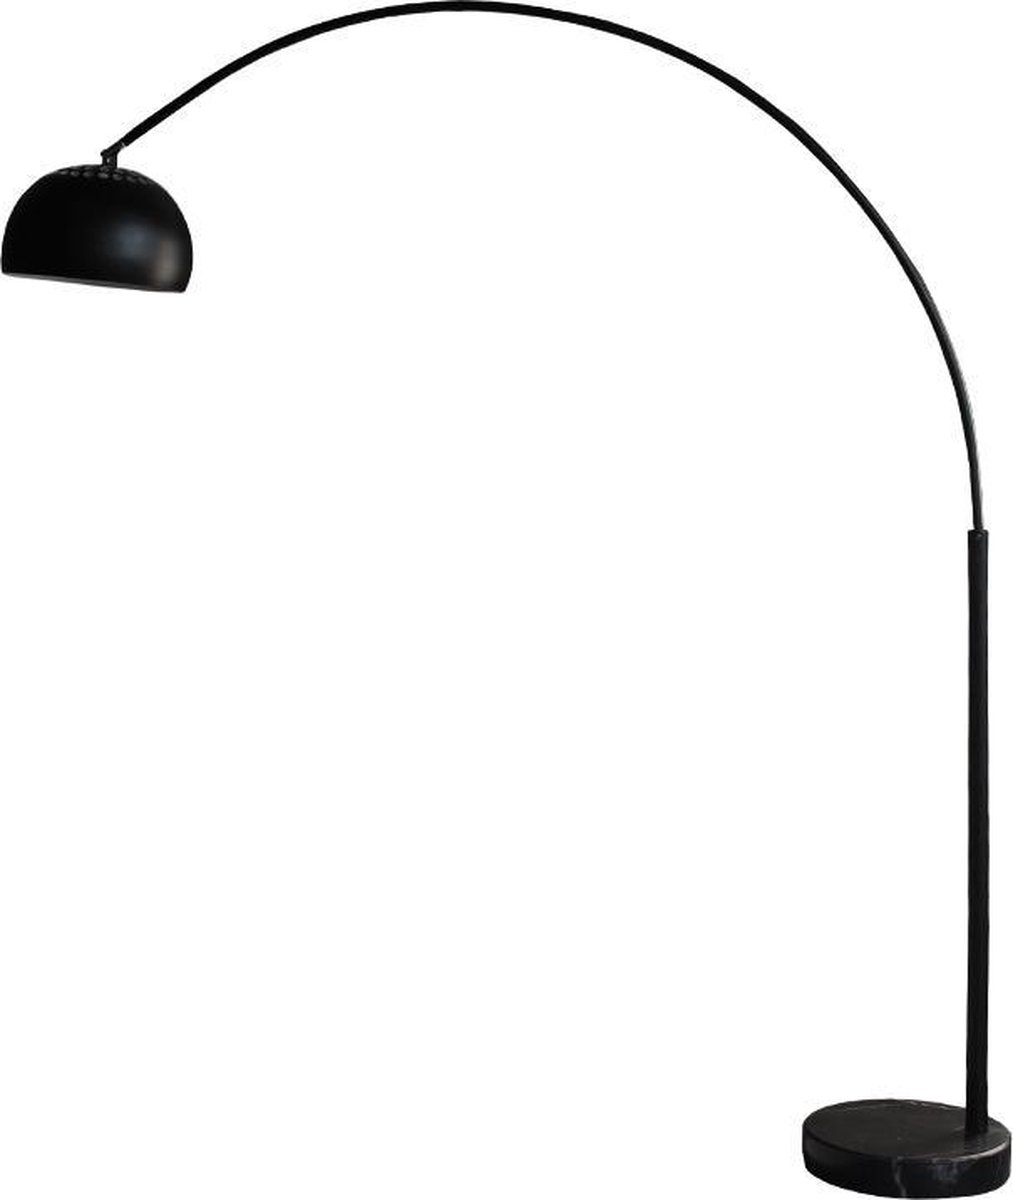 bol.com | LABEL51 Design Bowl - Vloerlamp - Zwart